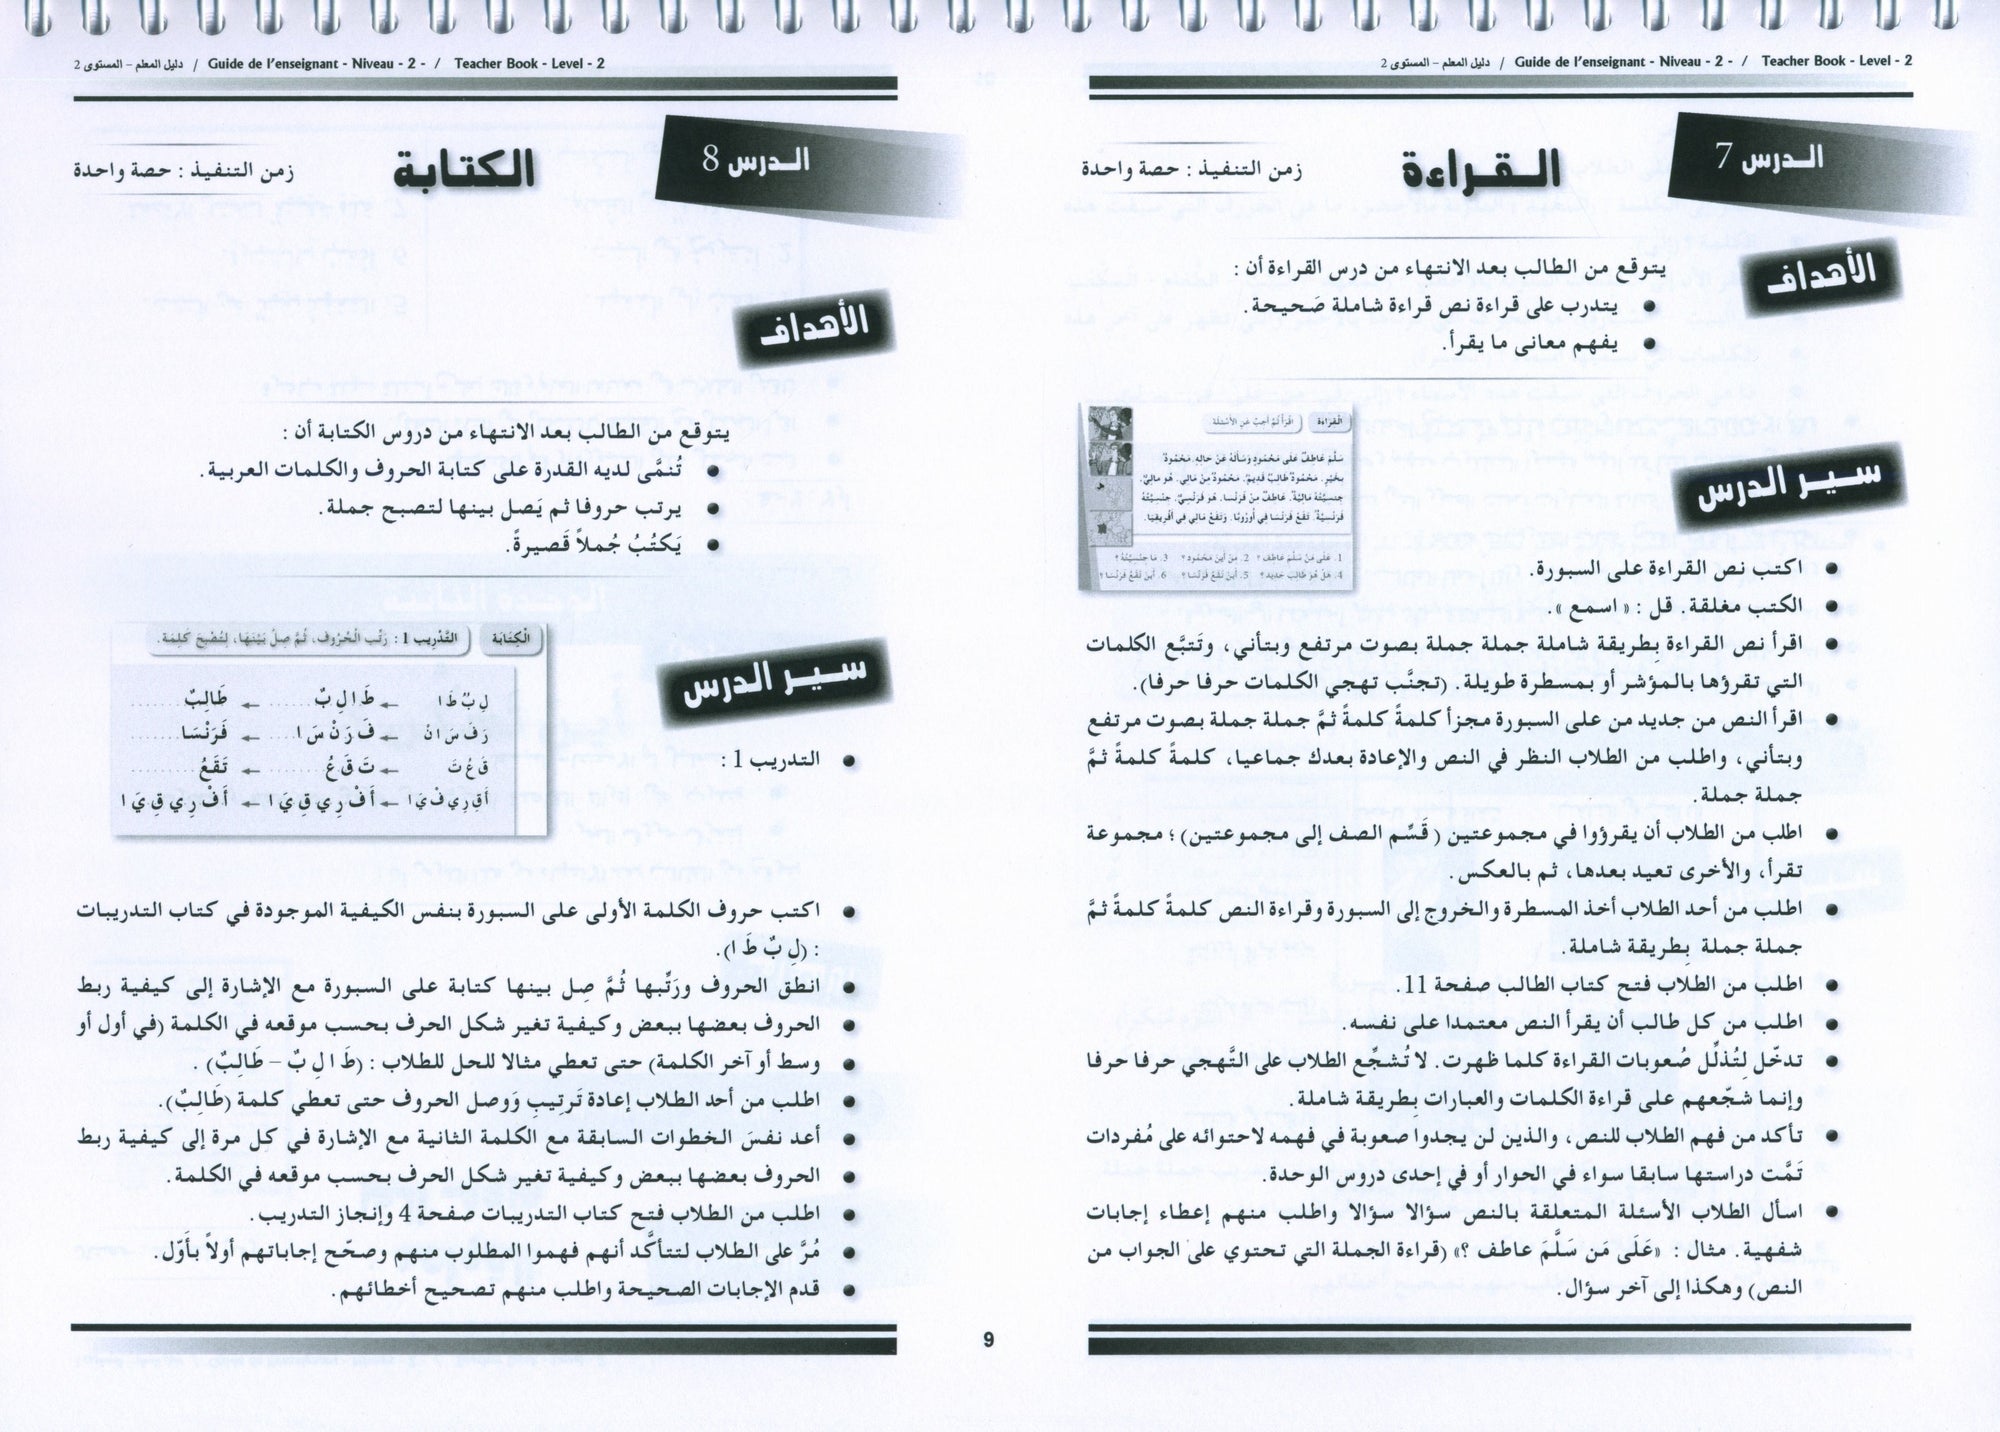 Arabic for Youth Teacher Book Level 2 العربية للشباب دليل المعلم